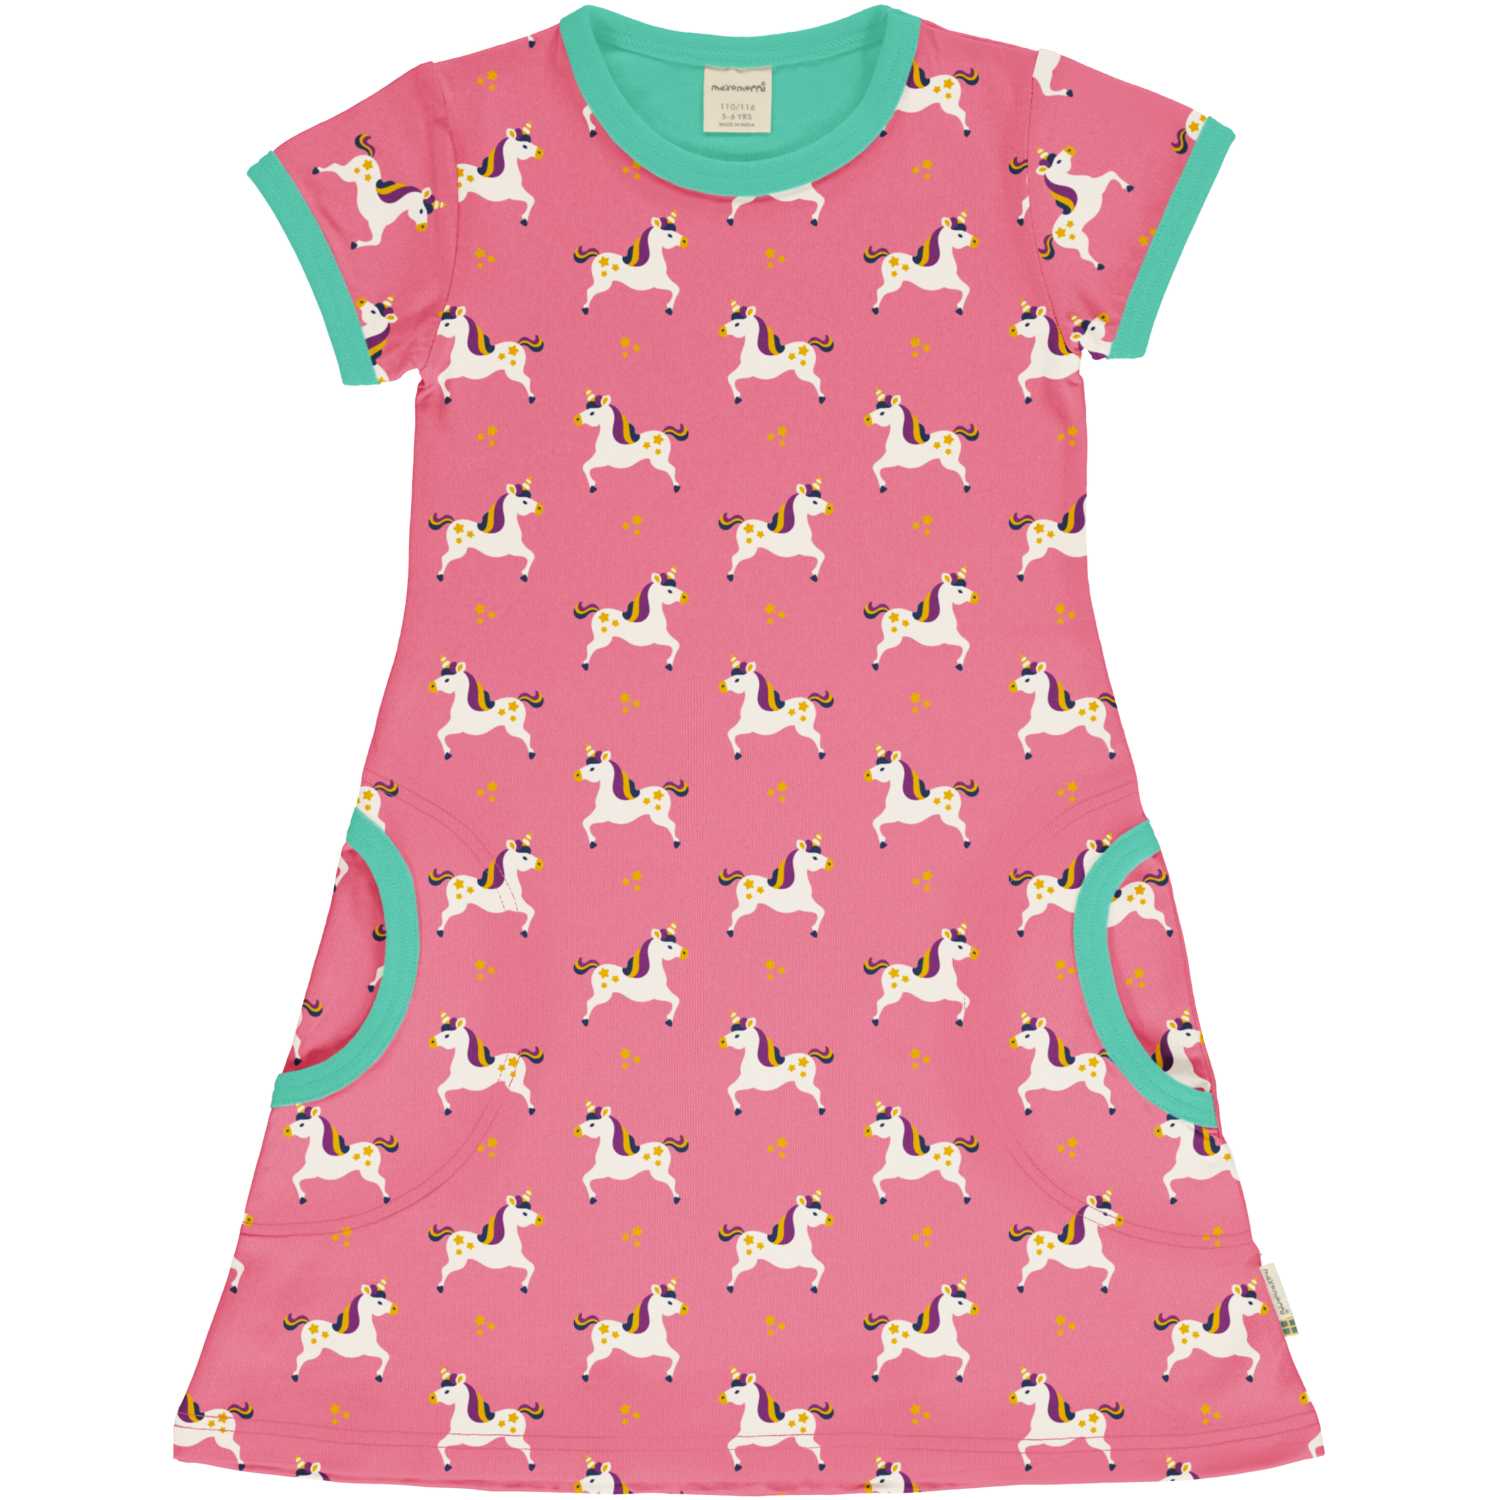 Maxomorra Pink Unicorn Pocket Dress Dxs2413-Sxs2405 Clothing 3-4YRS / Pink,5-6YRS / Pink,7-8YRS / Pink,9-10YRS / Pink,1-2 YRS / Pink